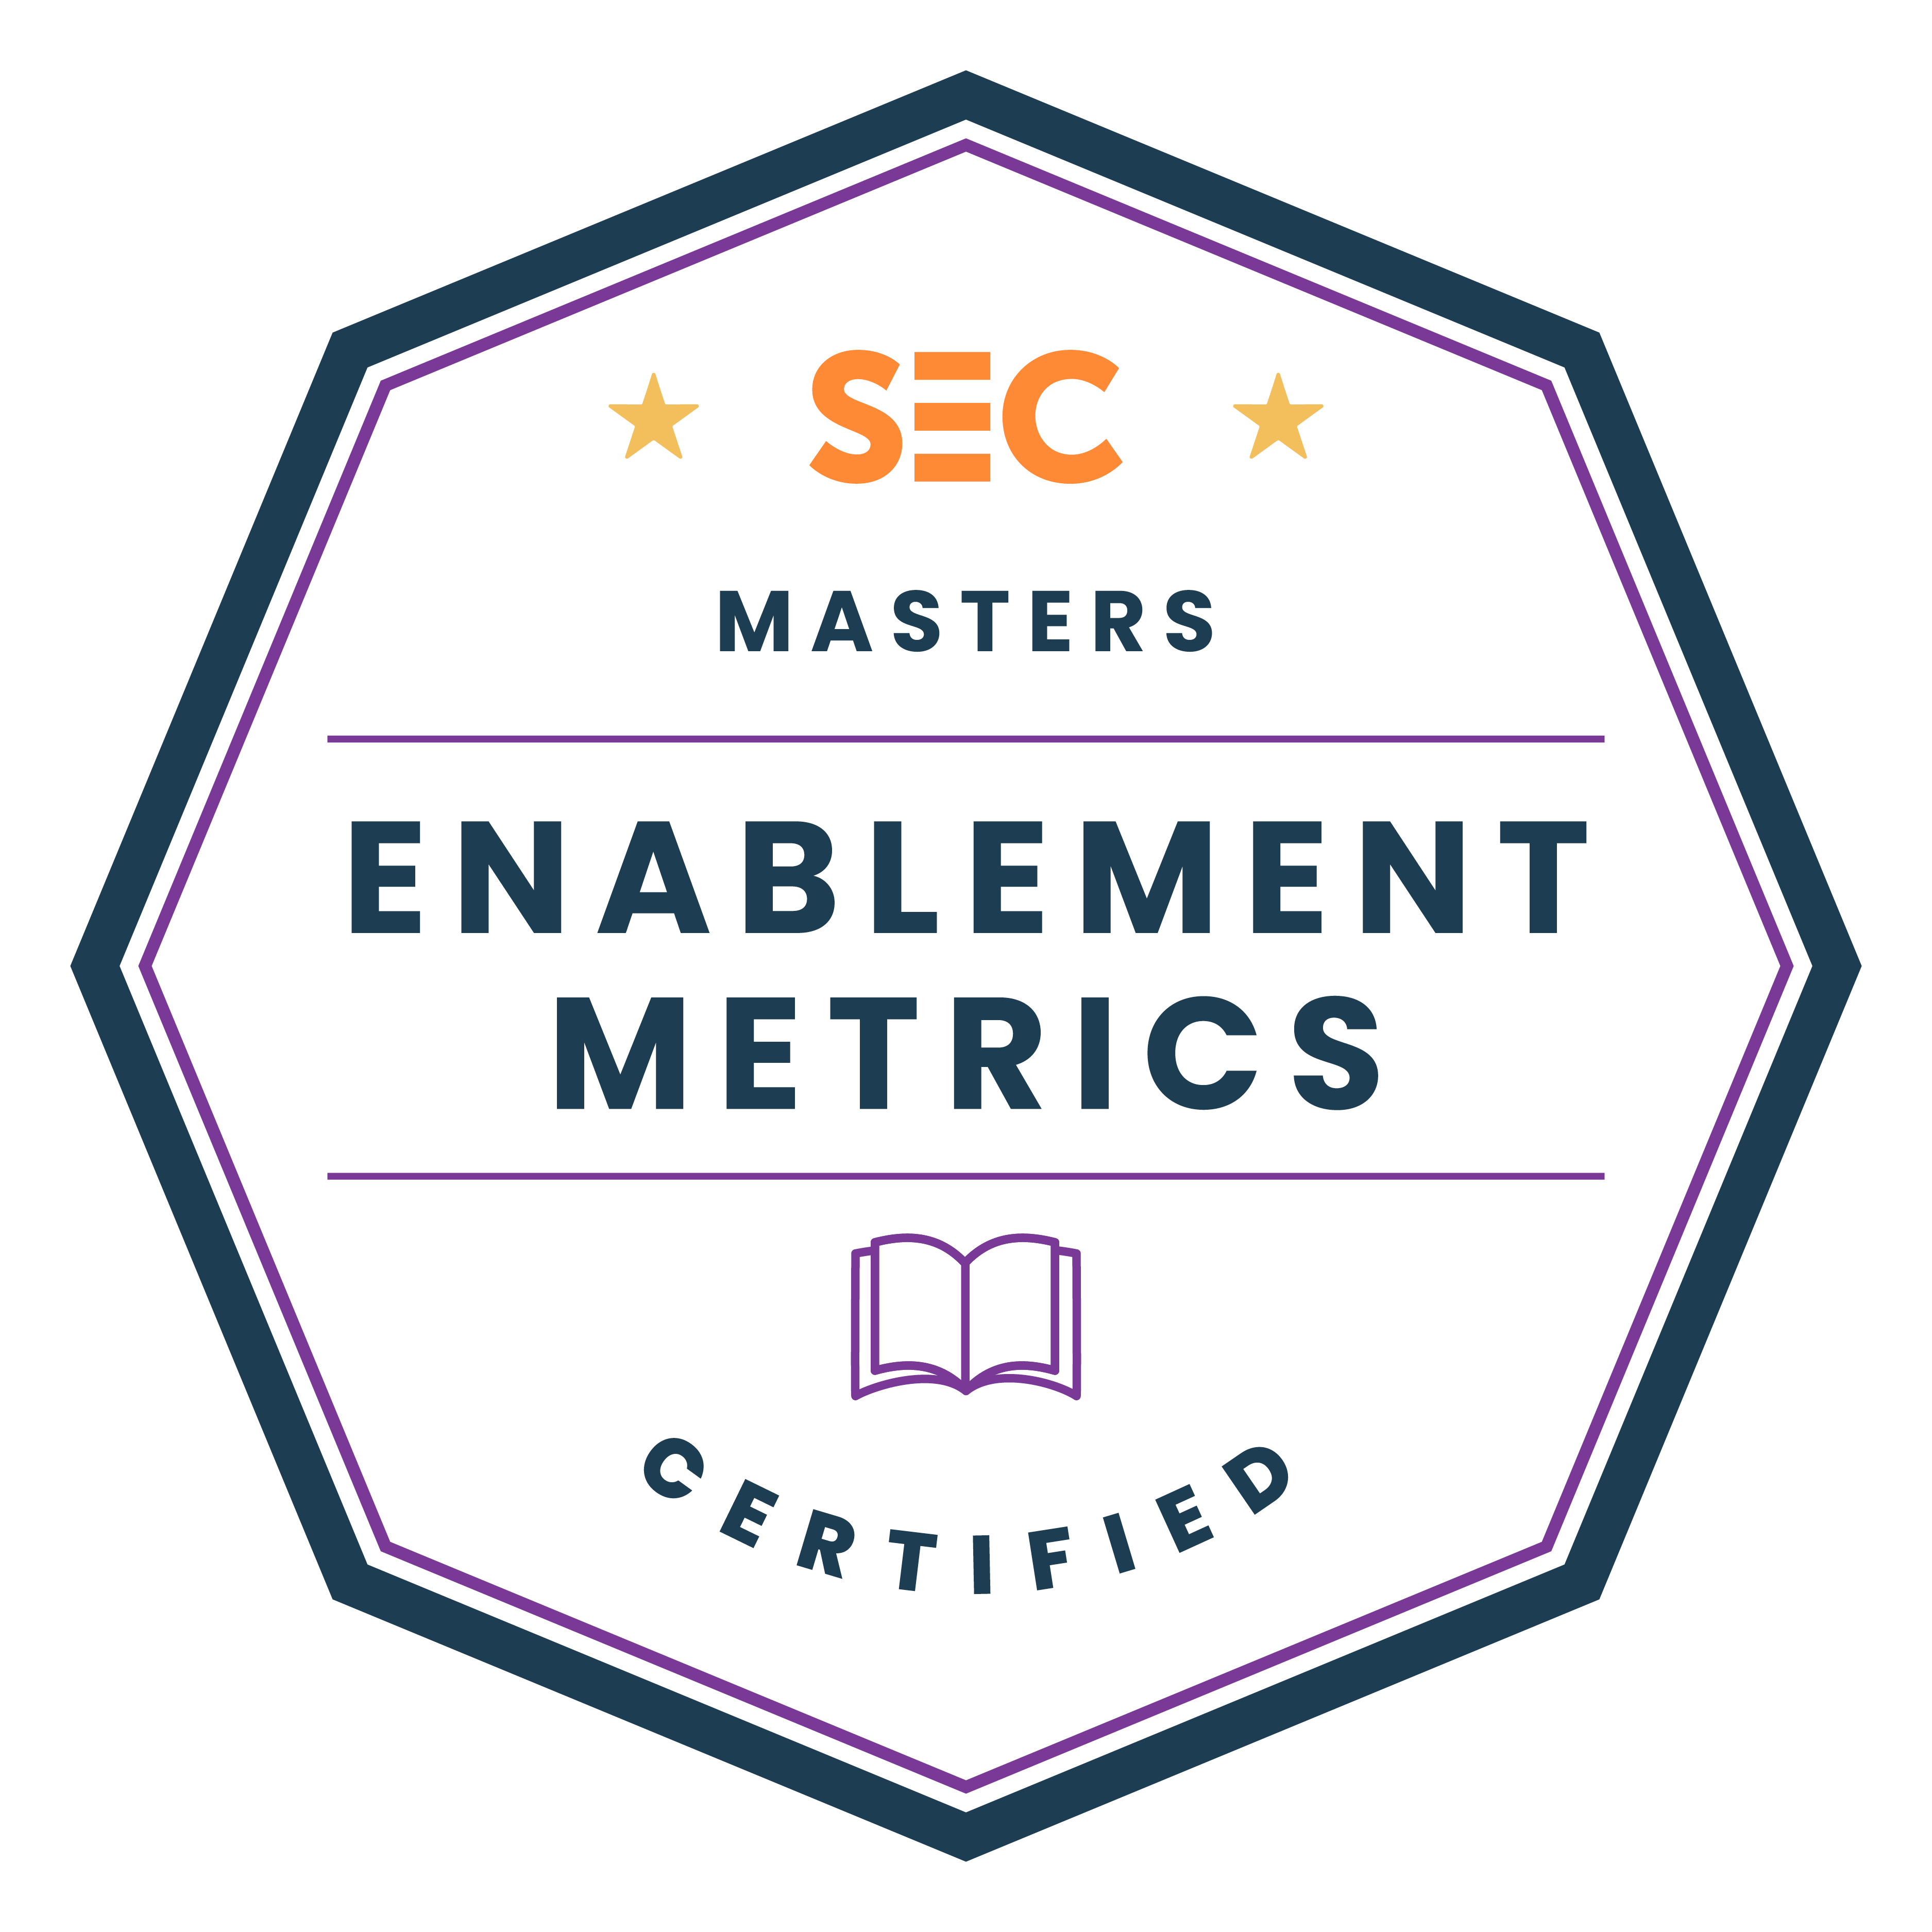 enablement metrics badge logo